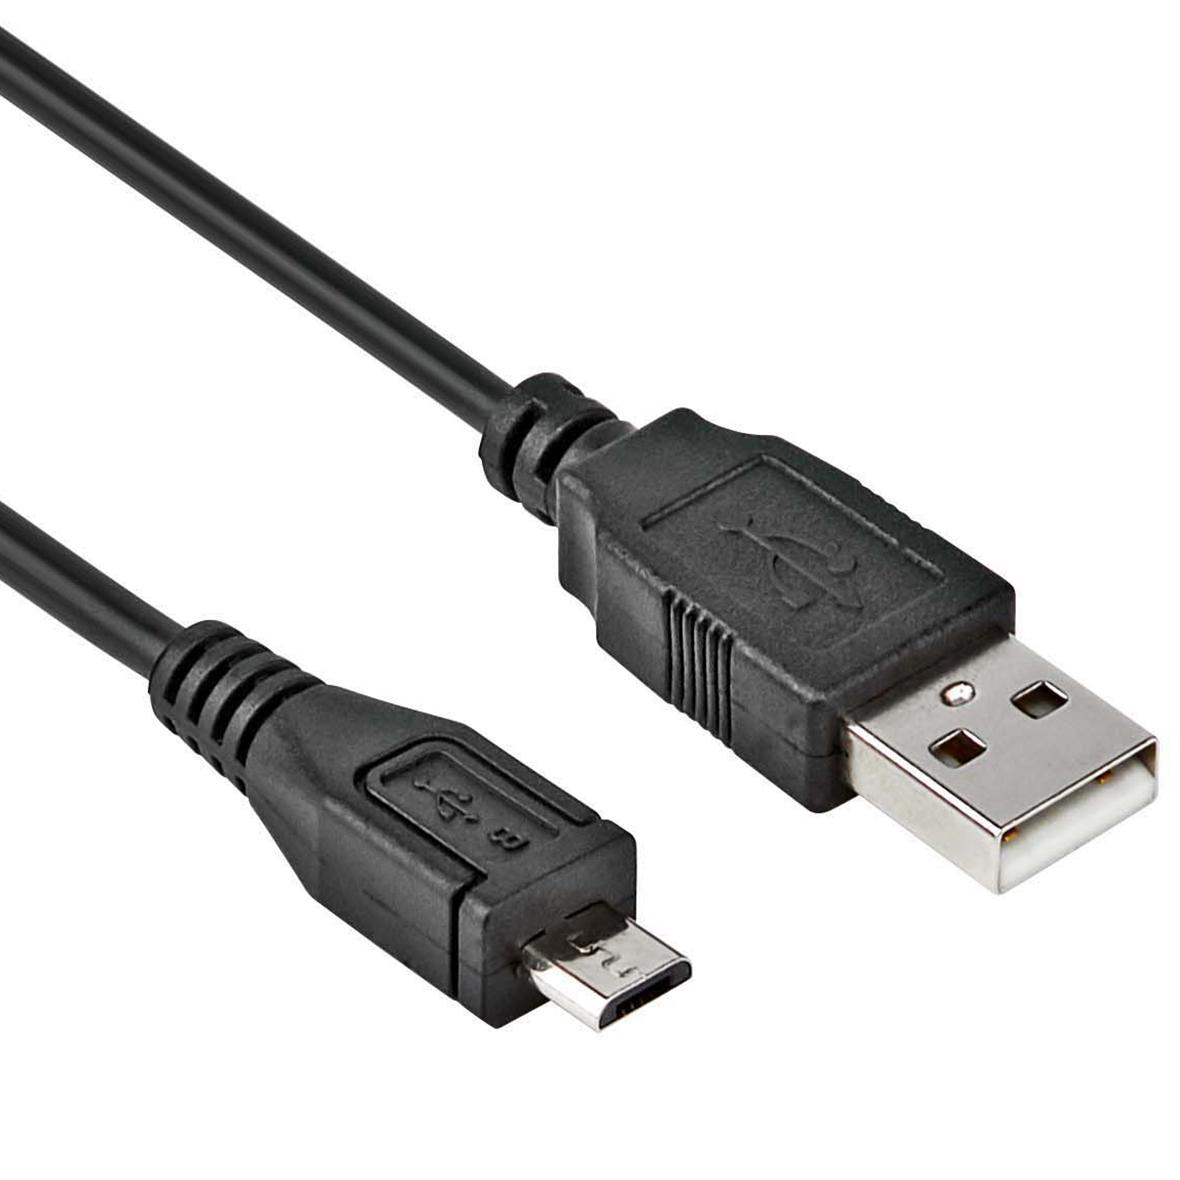 Micro USB kabel - Versie: 2.0 - High speed, Kleur: Zwart, Lengte: 3